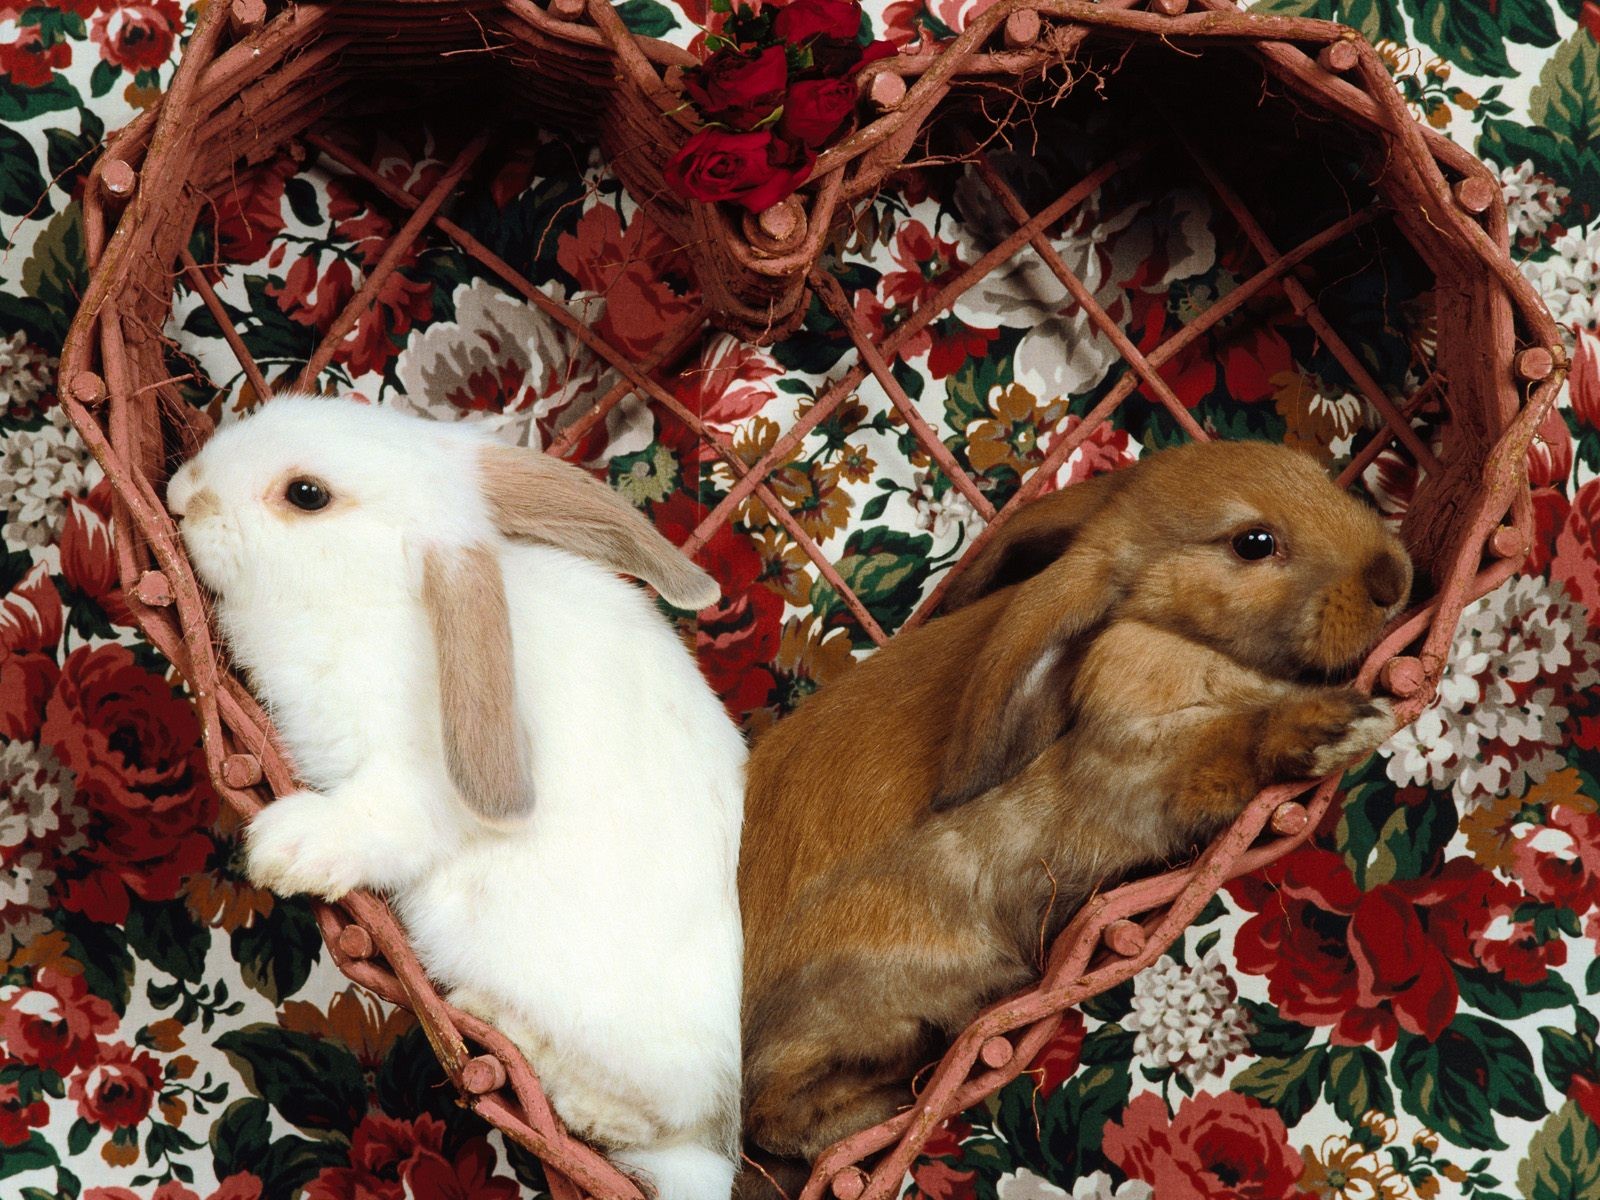 Зайчики и кролики фото